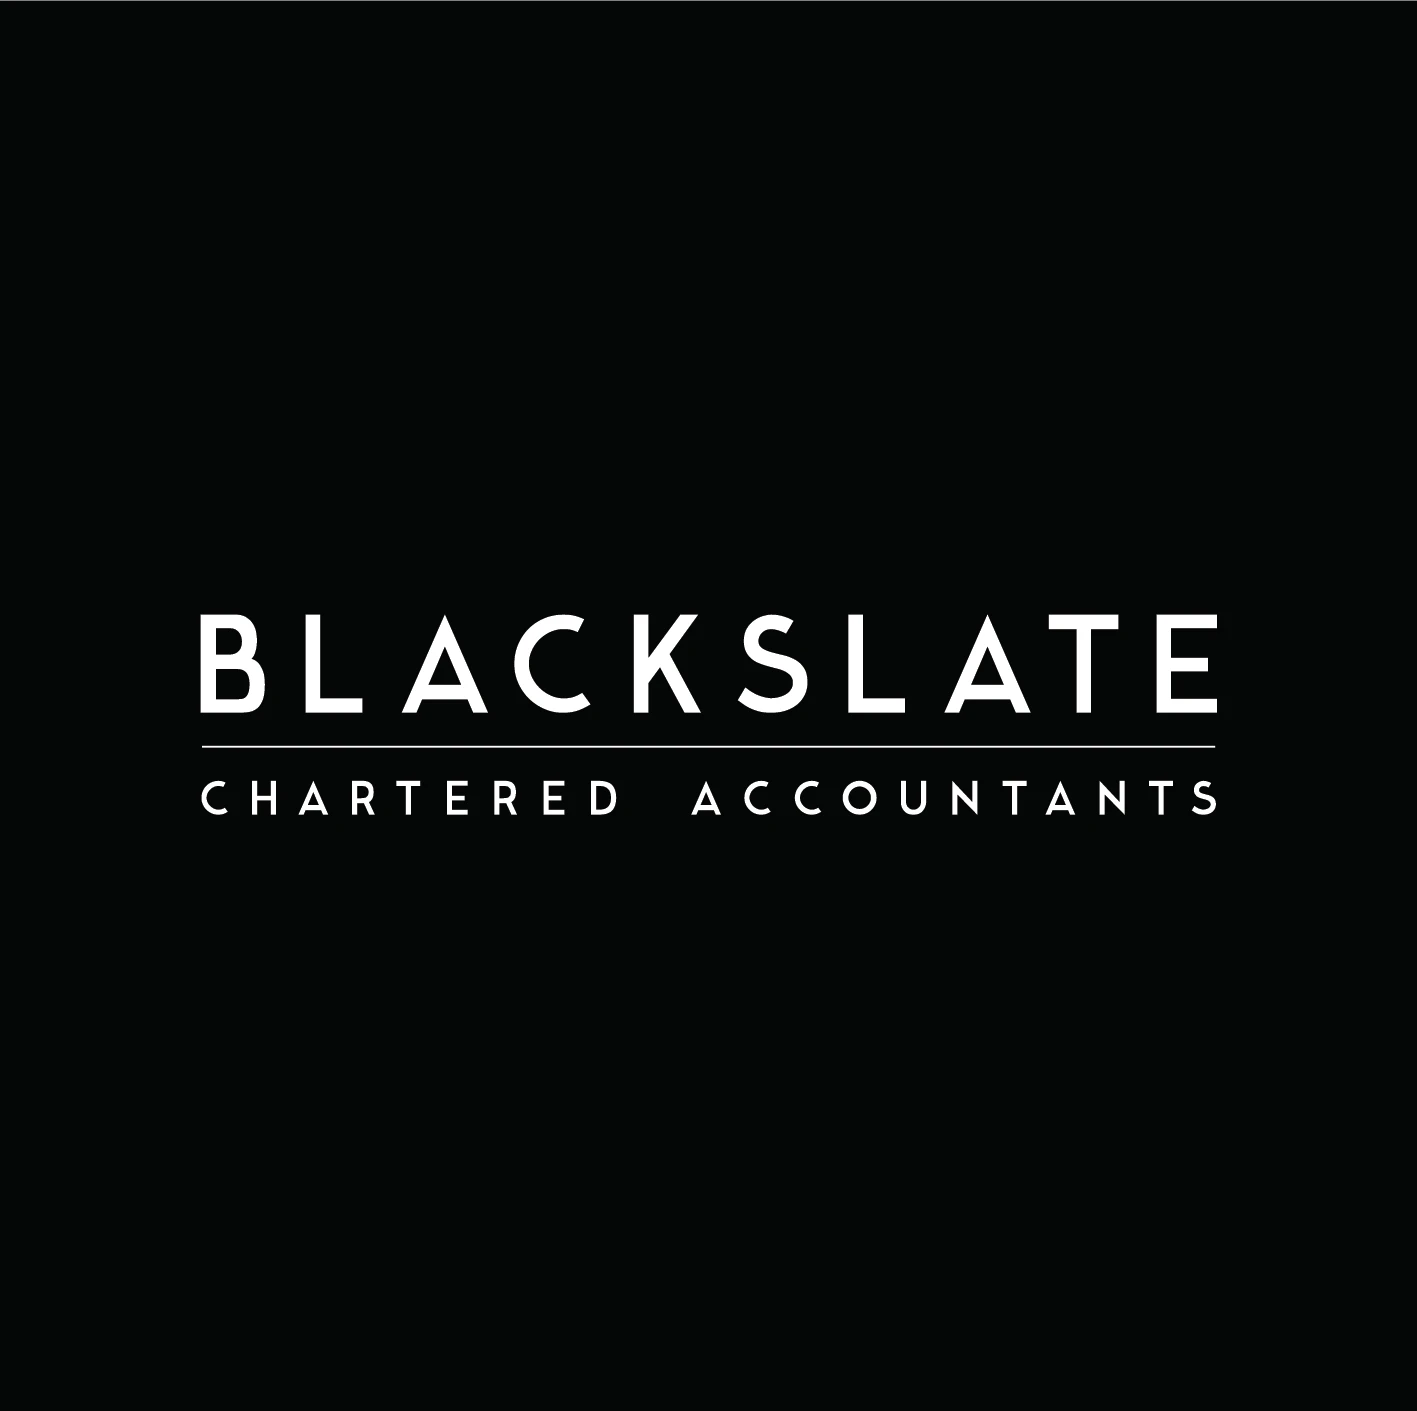 Blackslate Chartered Accountants Ltd